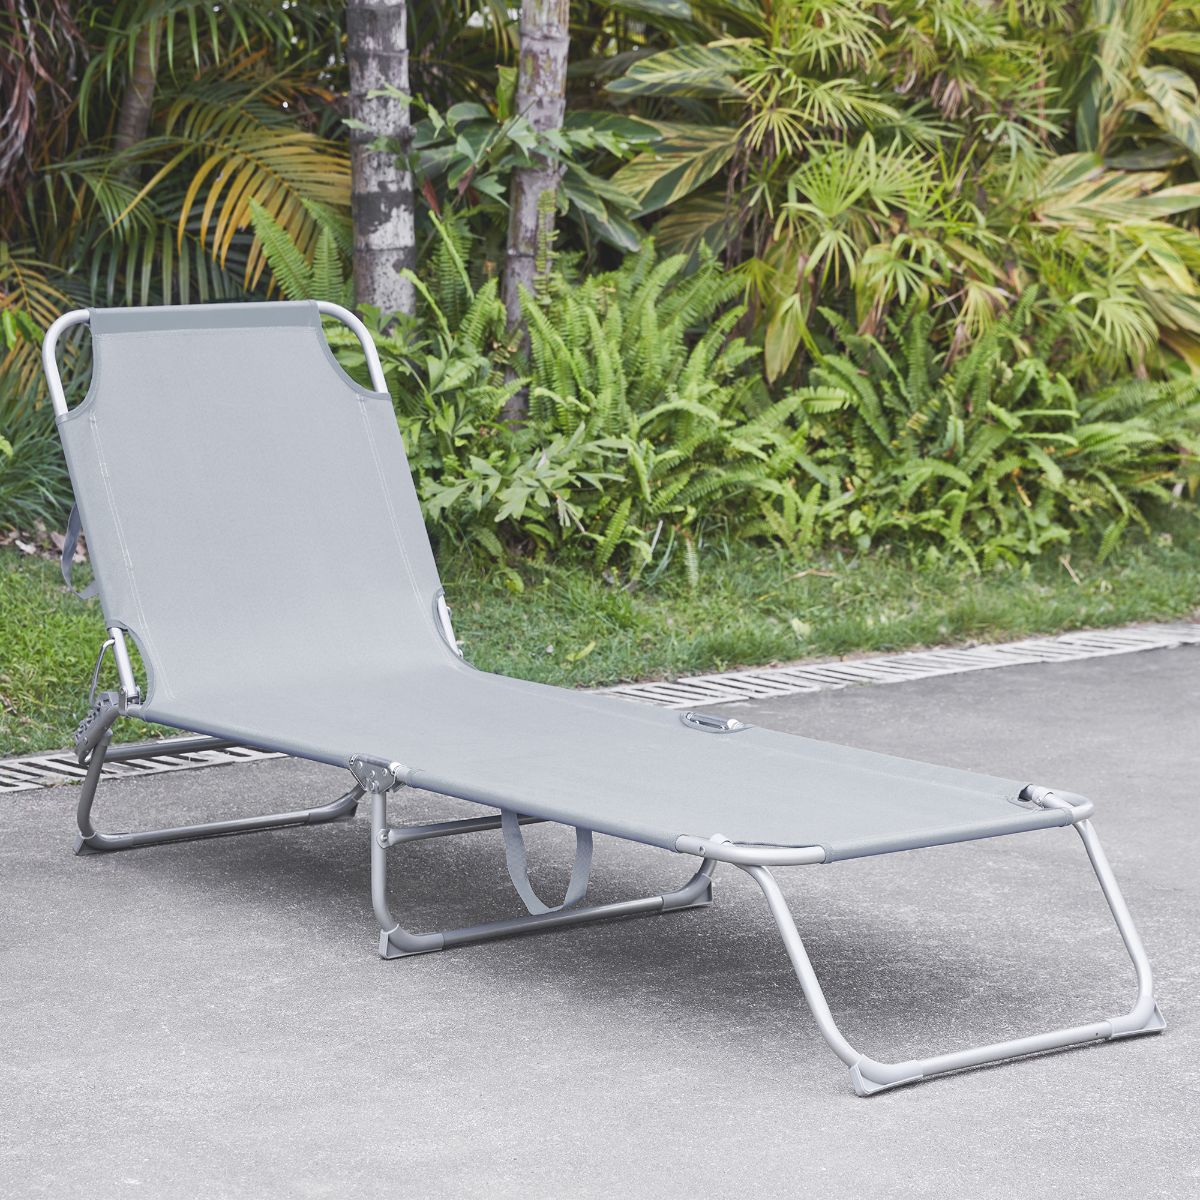 Foldable Sun Lounger Adjustable Back Rest Garden Chair Relaxer Patio